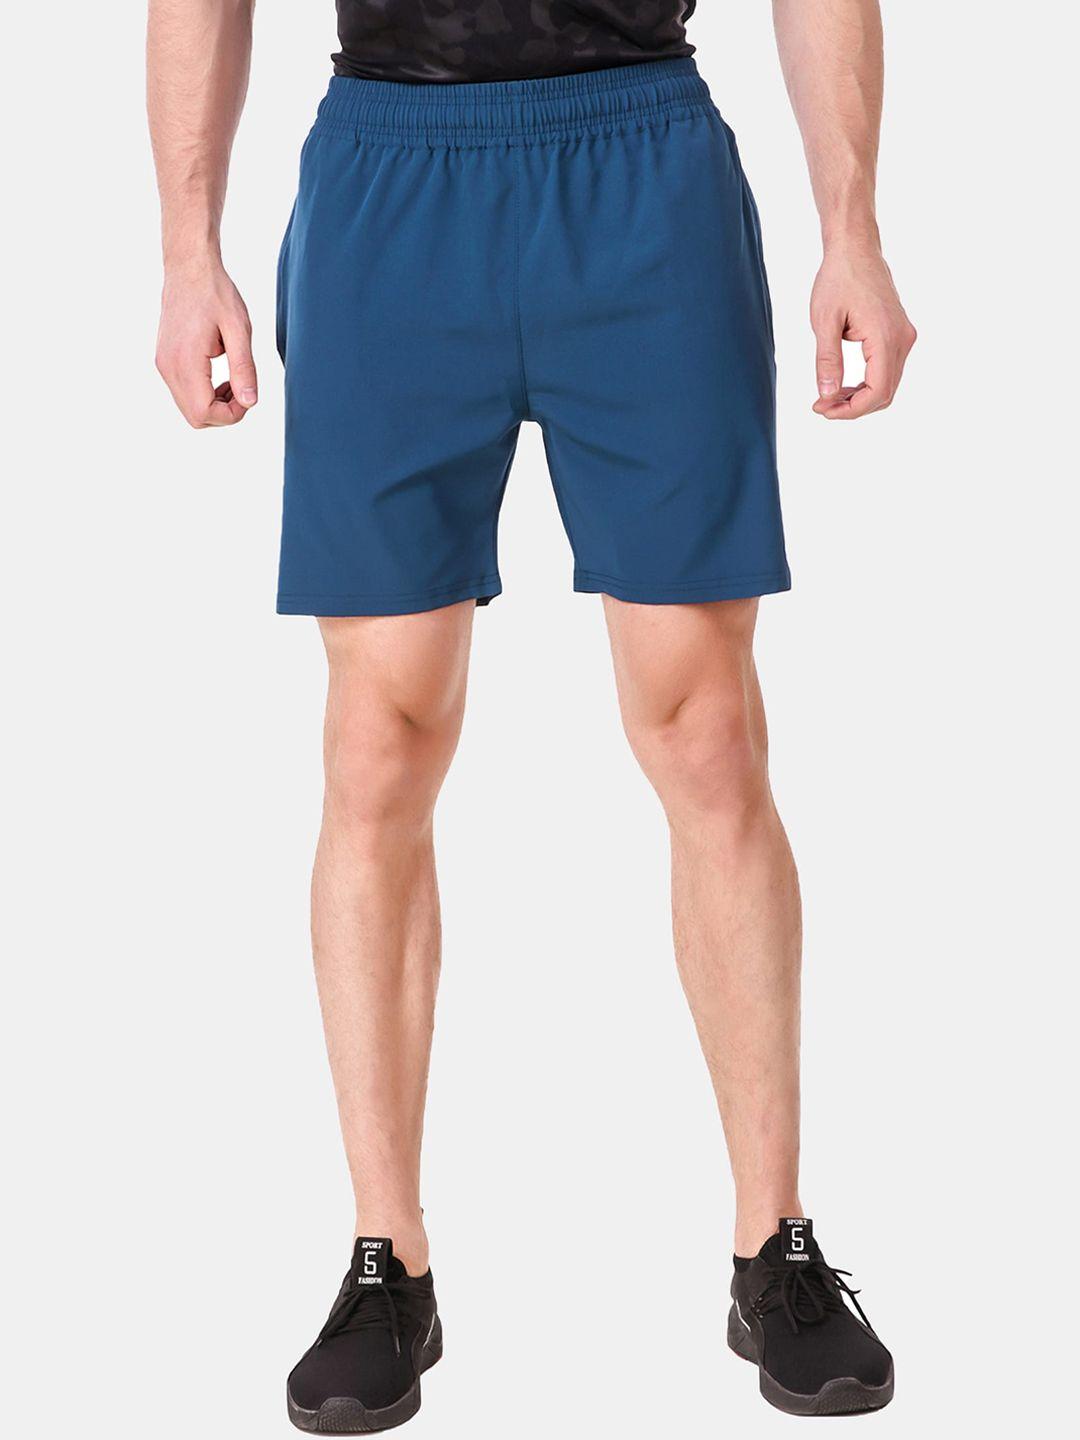 fitinc men blue solid slim fit running sports shorts